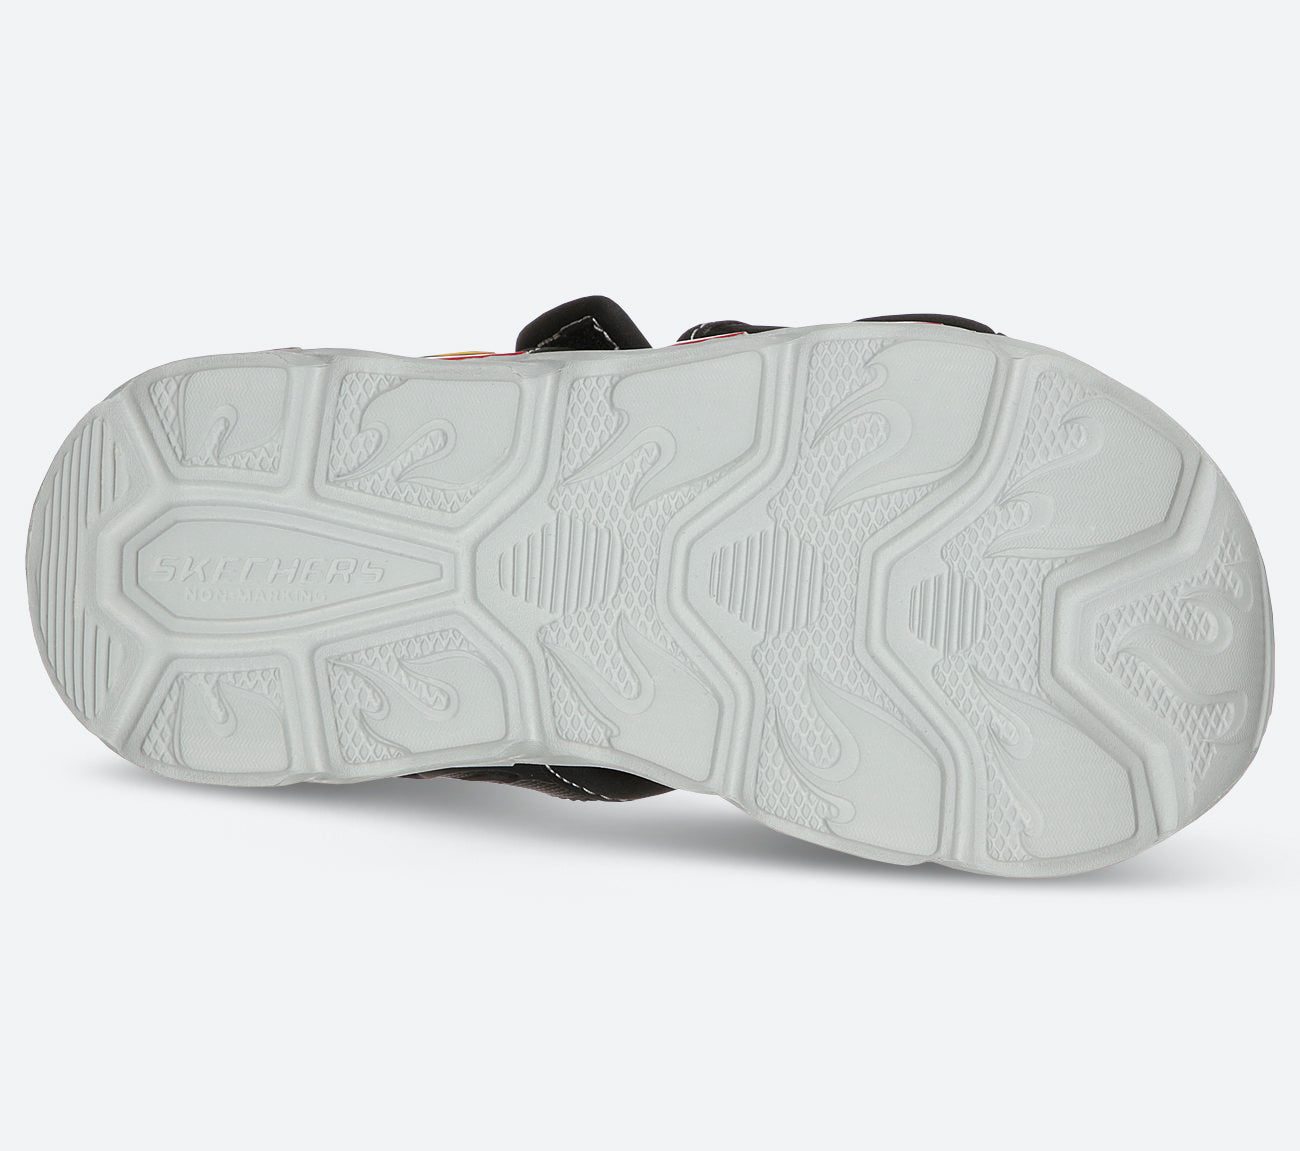 S Lights: Thermo Splash - Heat Flo Sandal Skechers